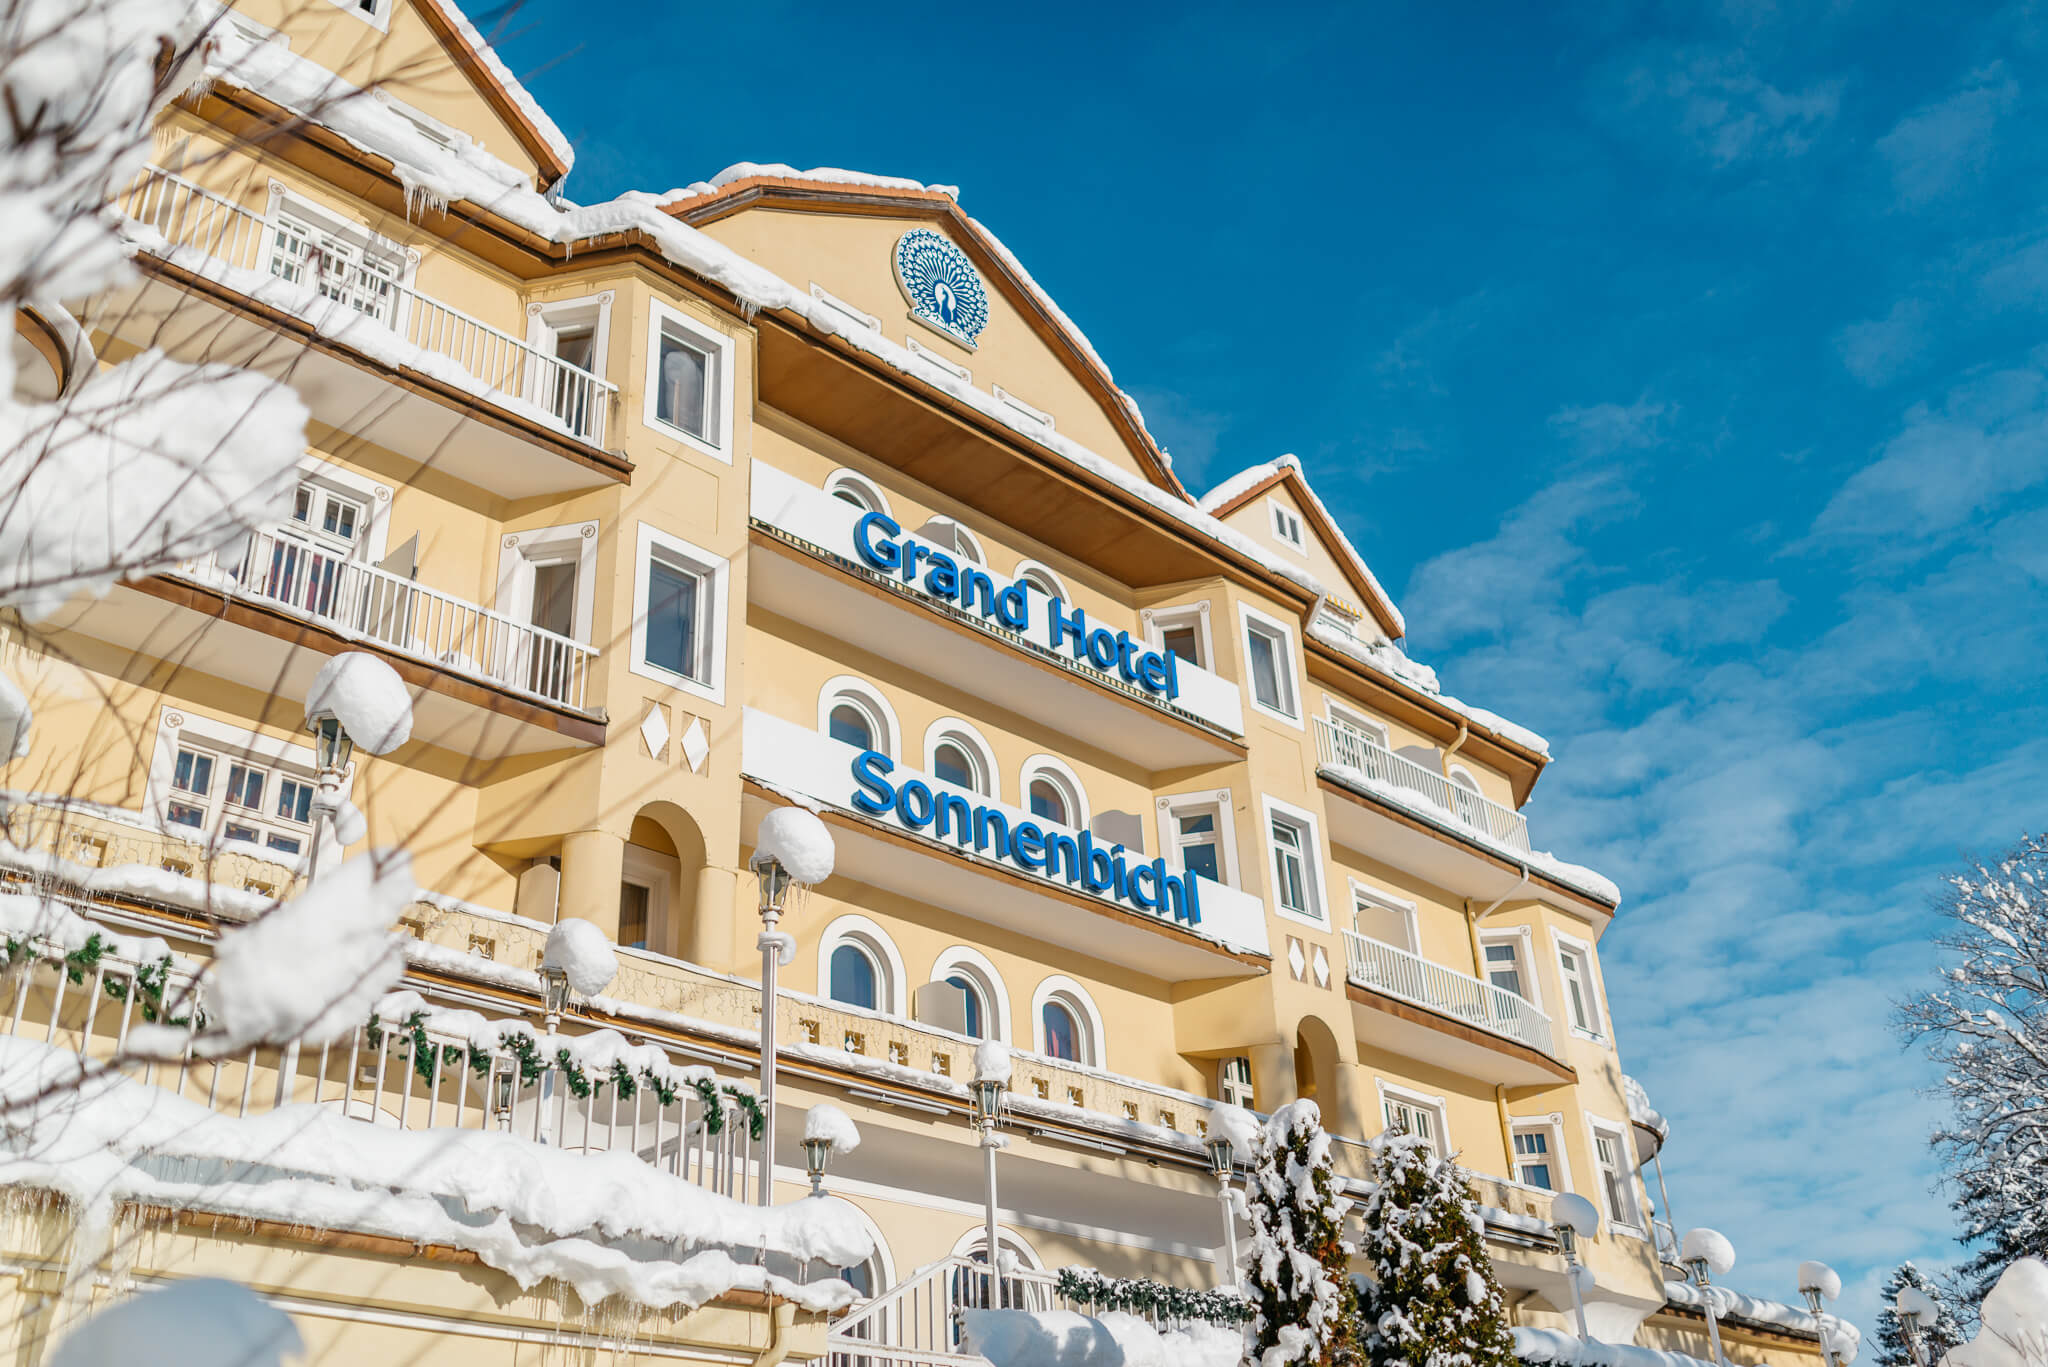 grand hotel sonnenbichl